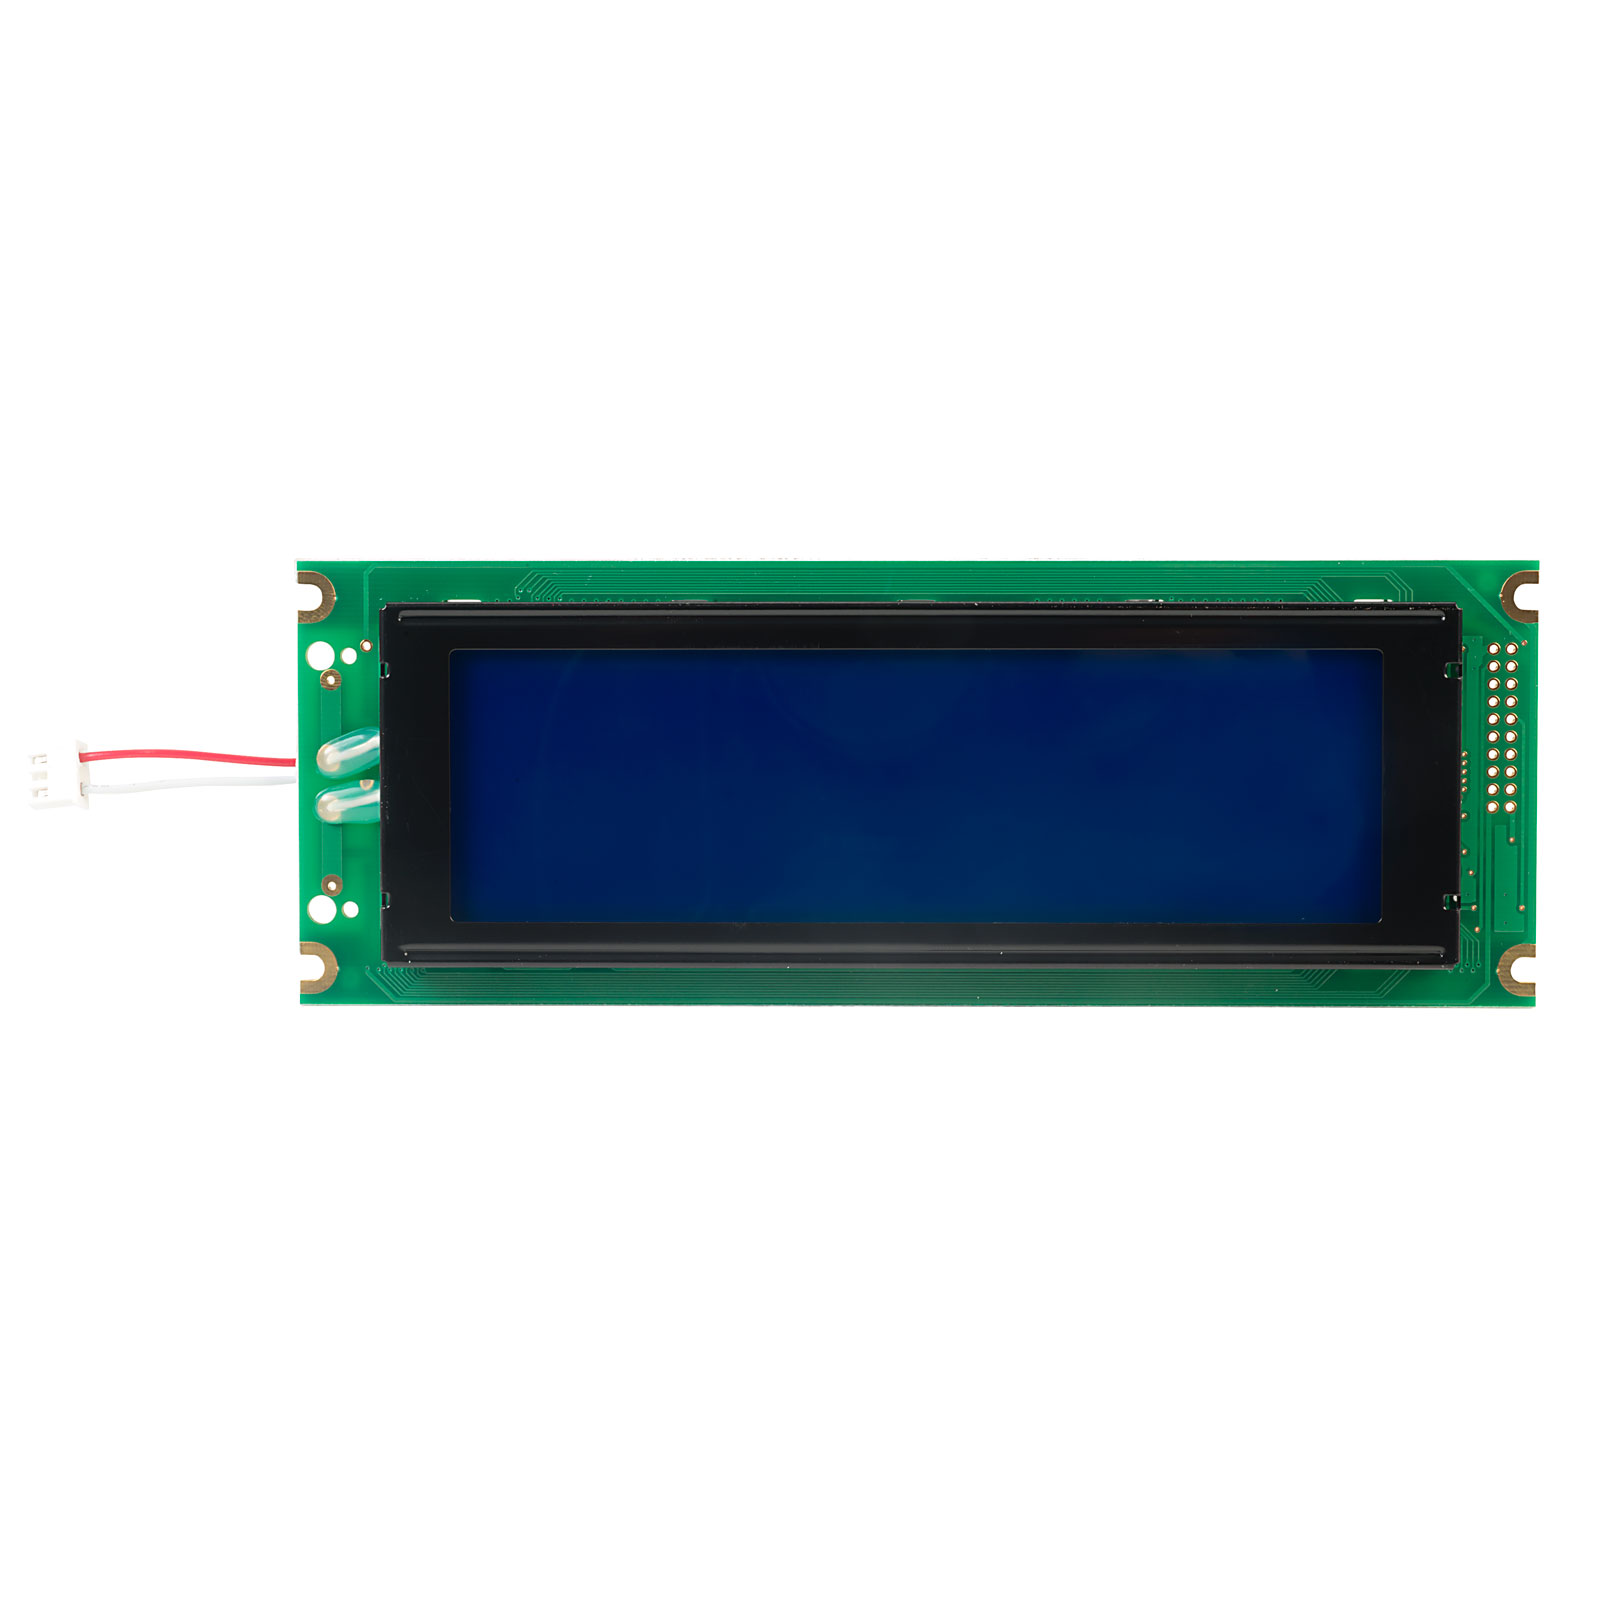 8x2 Character LCD, 8x2 LCD Display, 8x2 LCD Module - WINSTAR